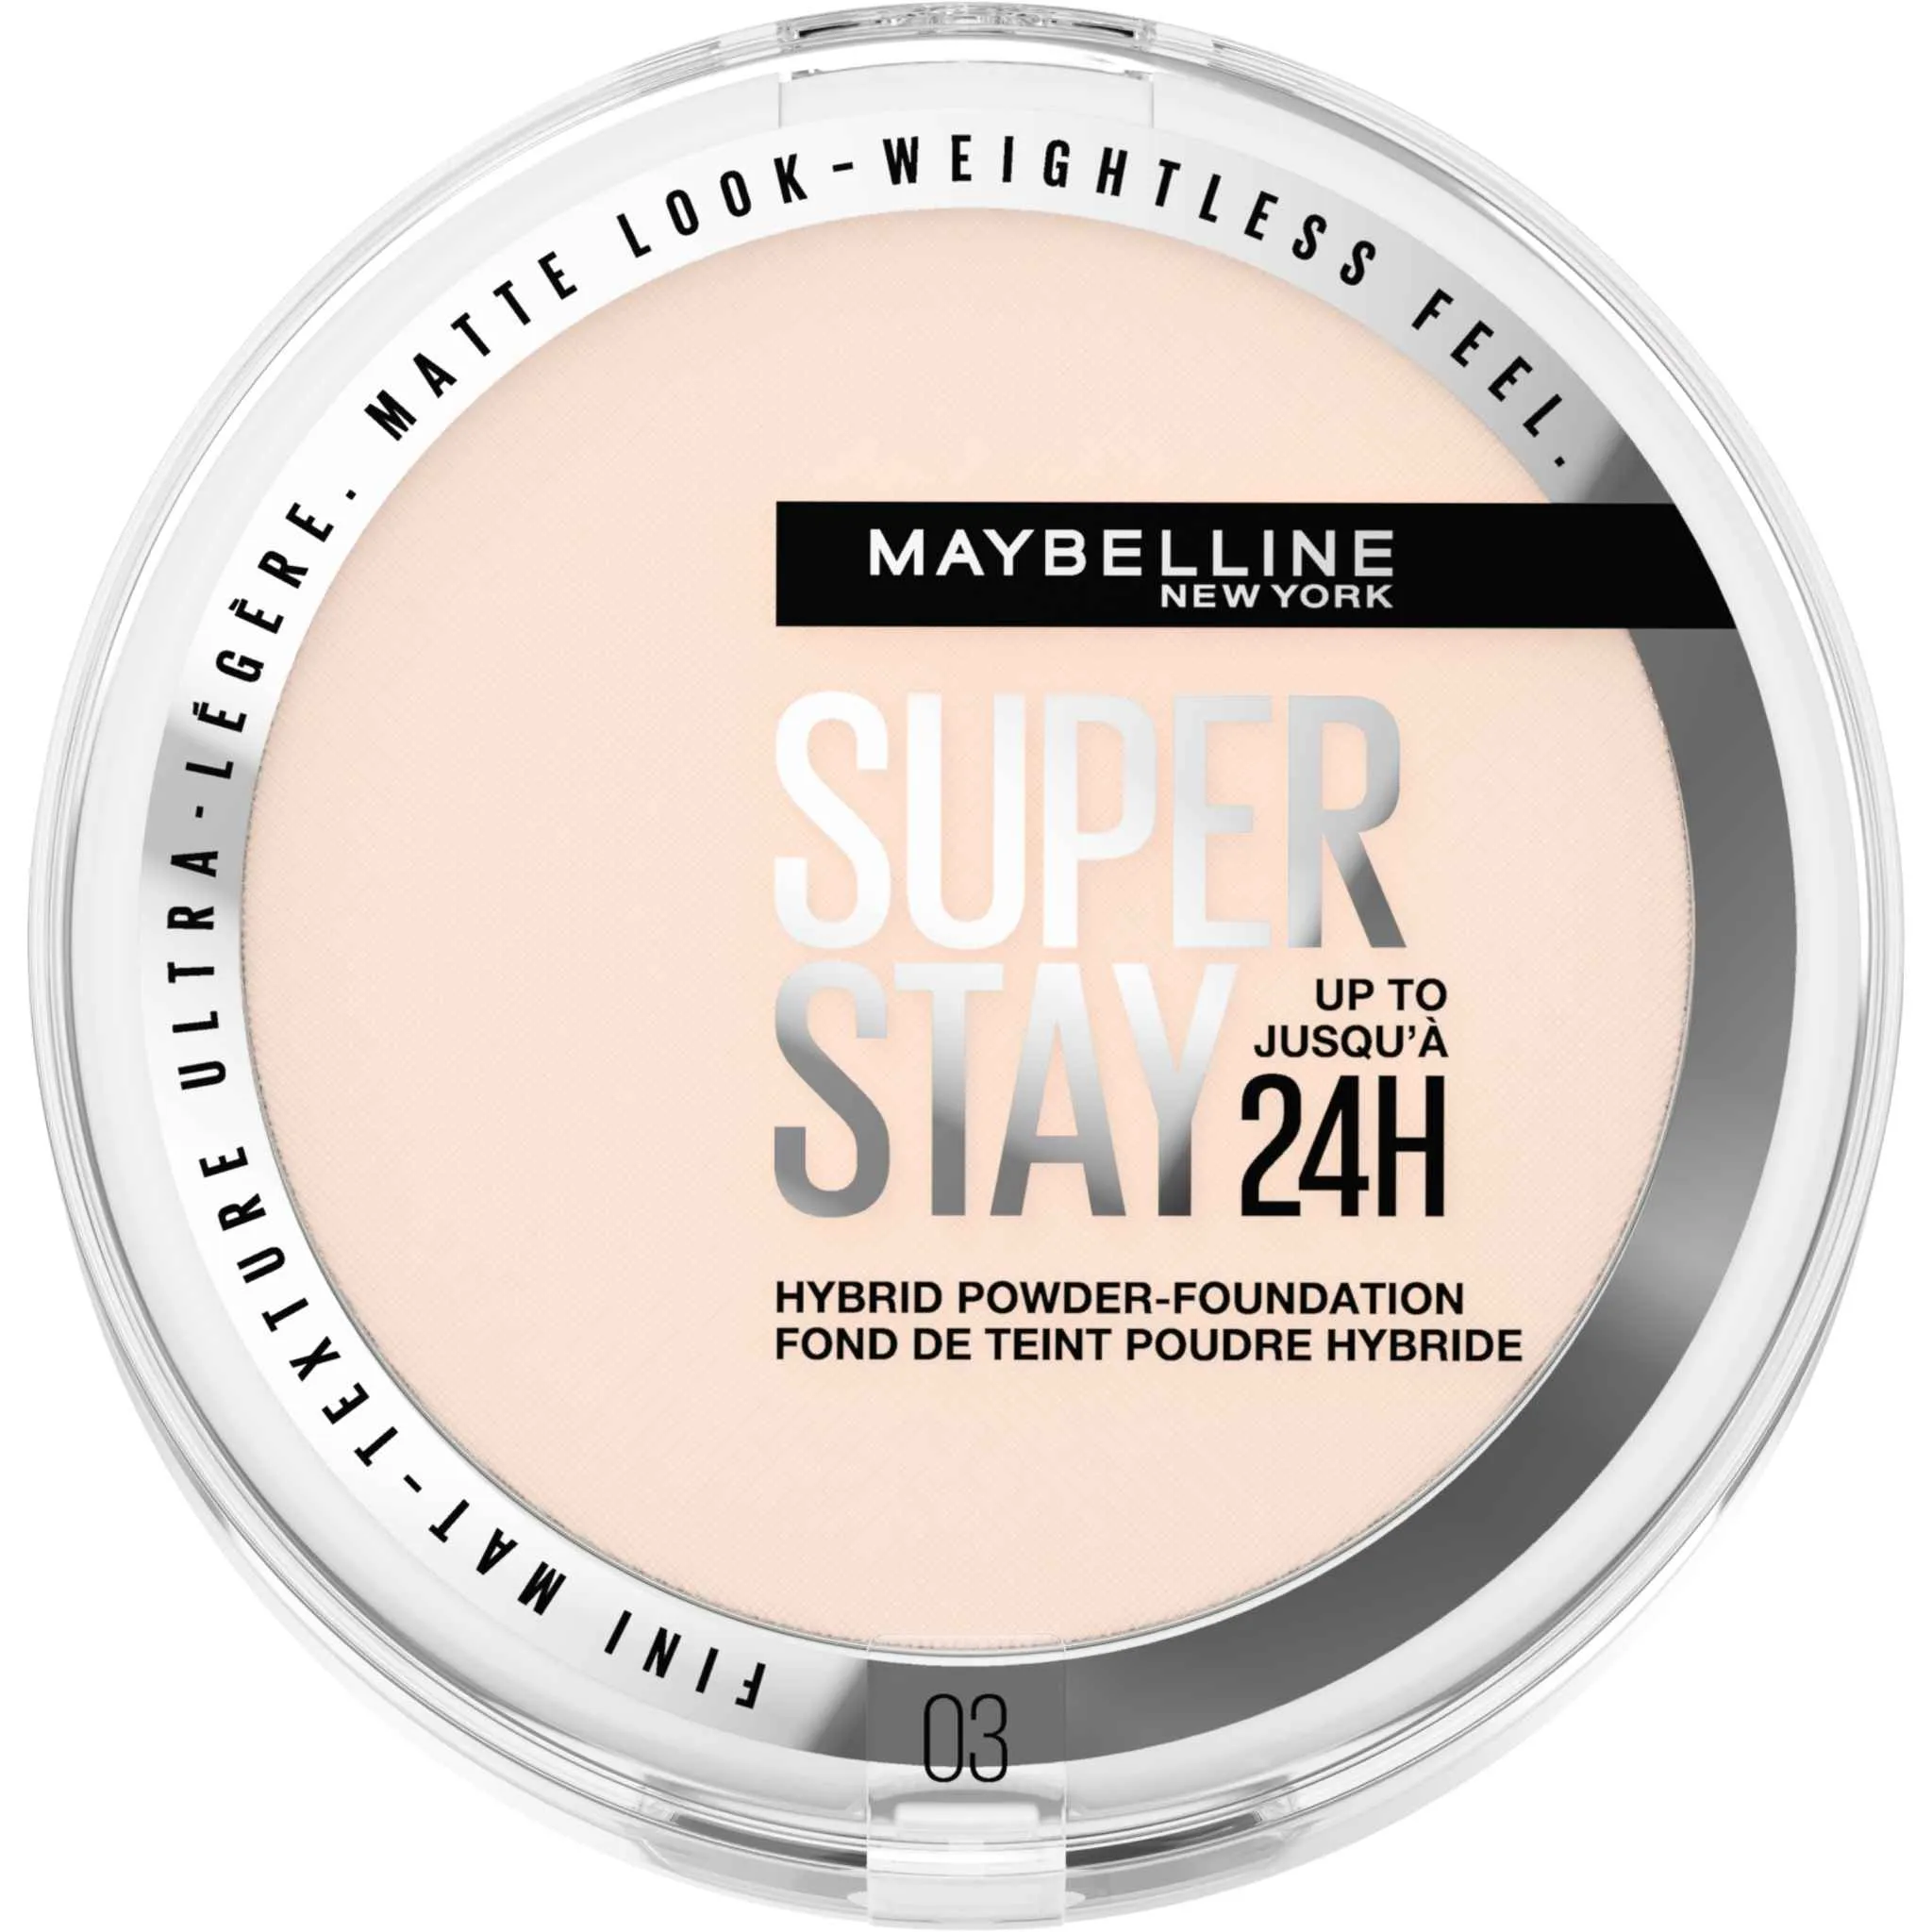 Maybelline New York SuperStay 24H Hybrid Powder-Foundation 03 make-up v púdri, 9 g 1×9 g, púdrový make-up